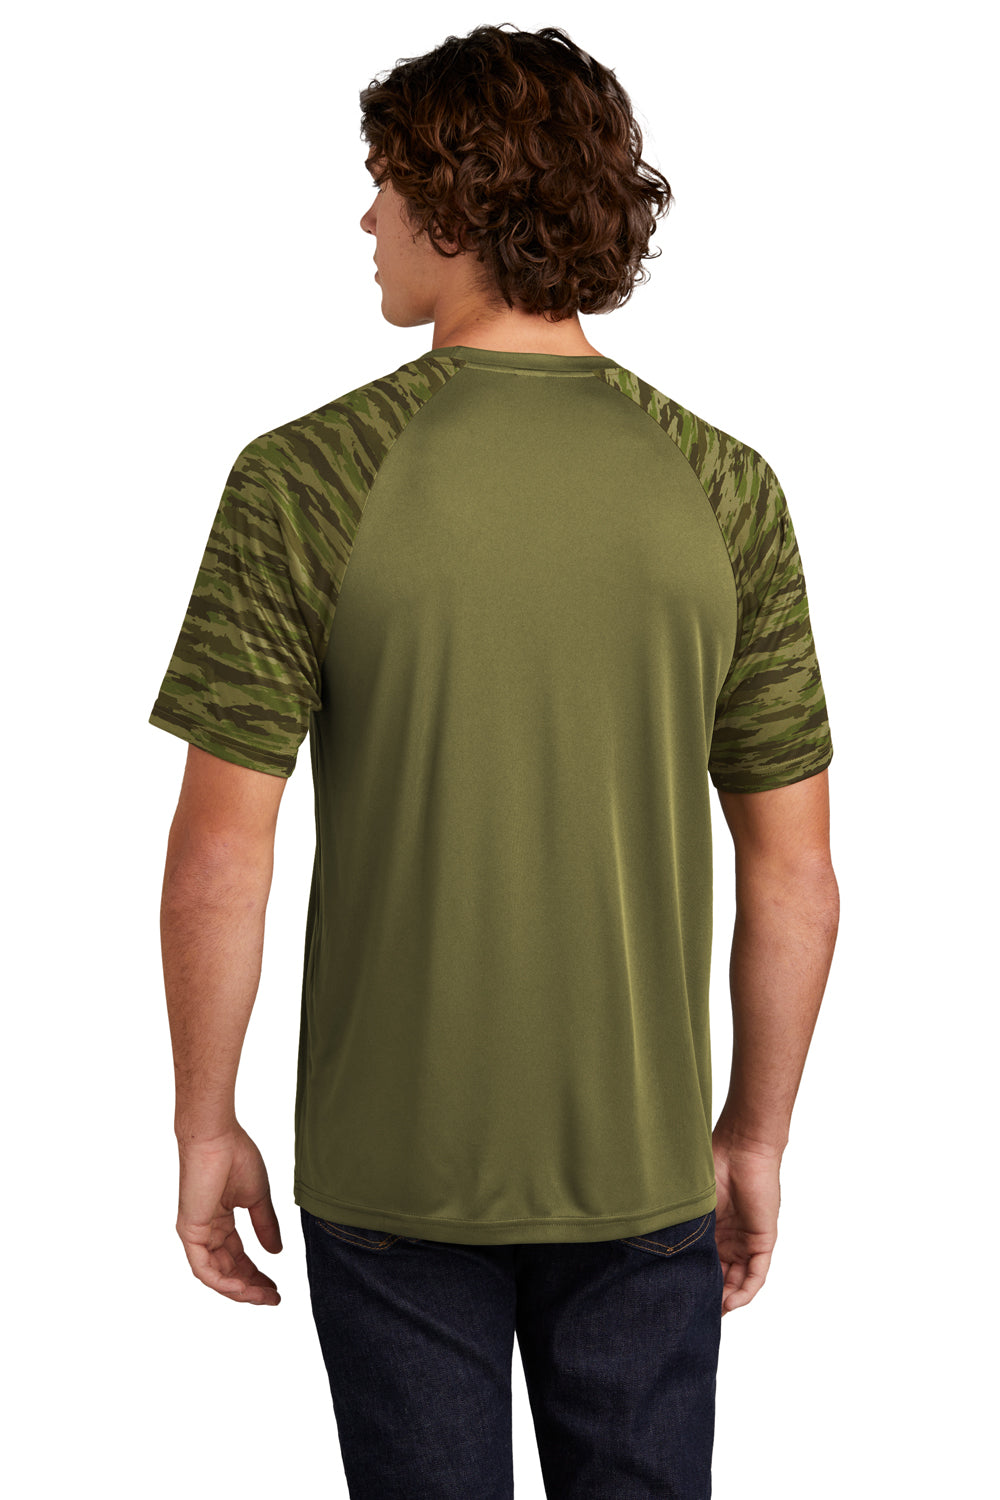 Sport-Tek Mens Drift Camo Colorblock Short Sleeve Crewneck T-Shirt Olive Drab Green Back